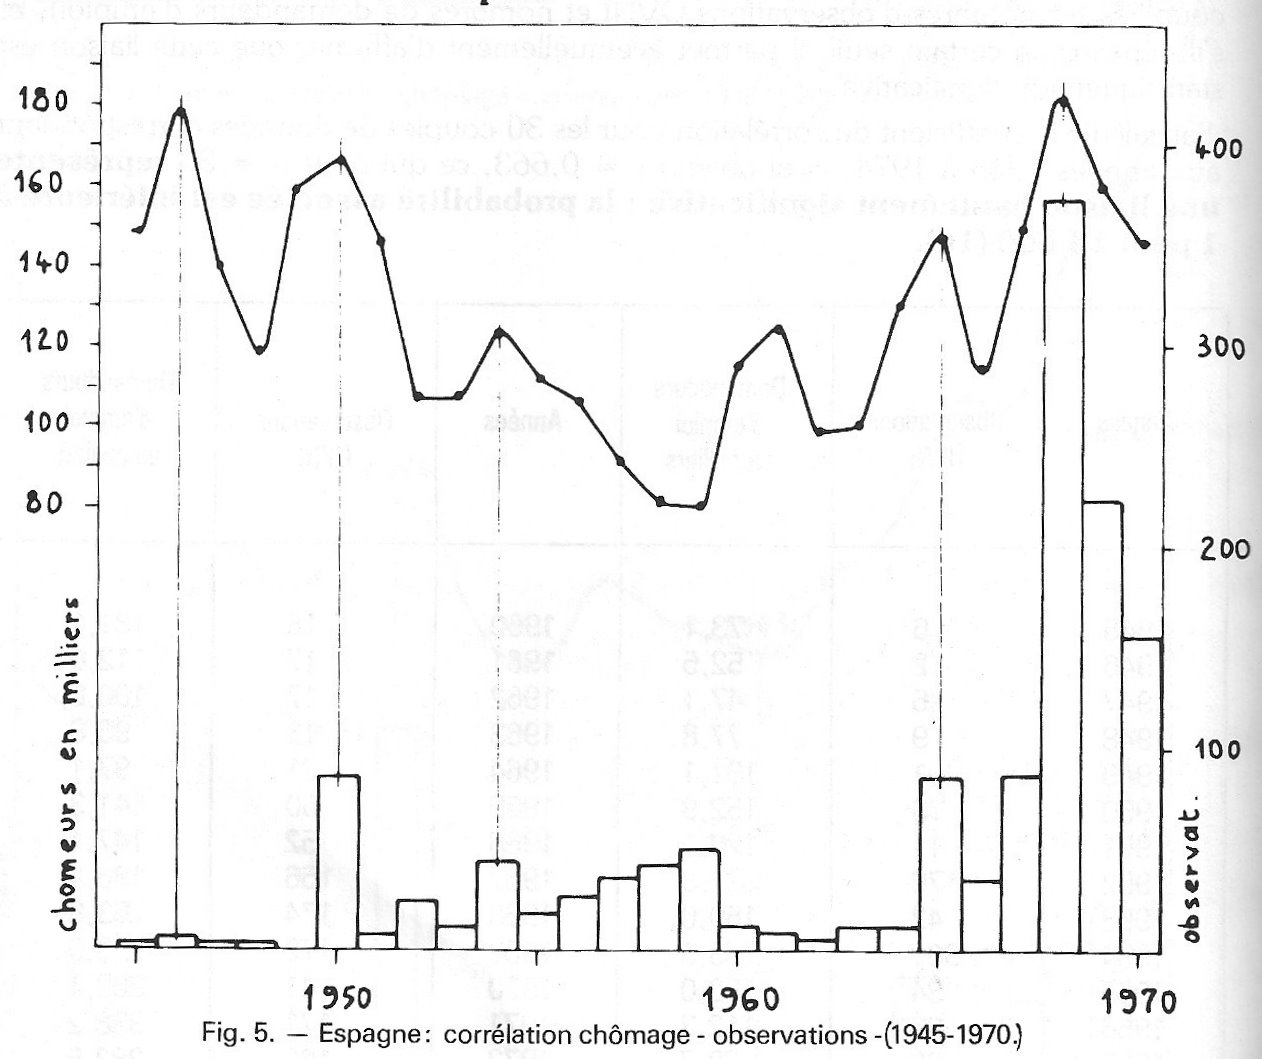 ation chômage - observations (1945-1970)